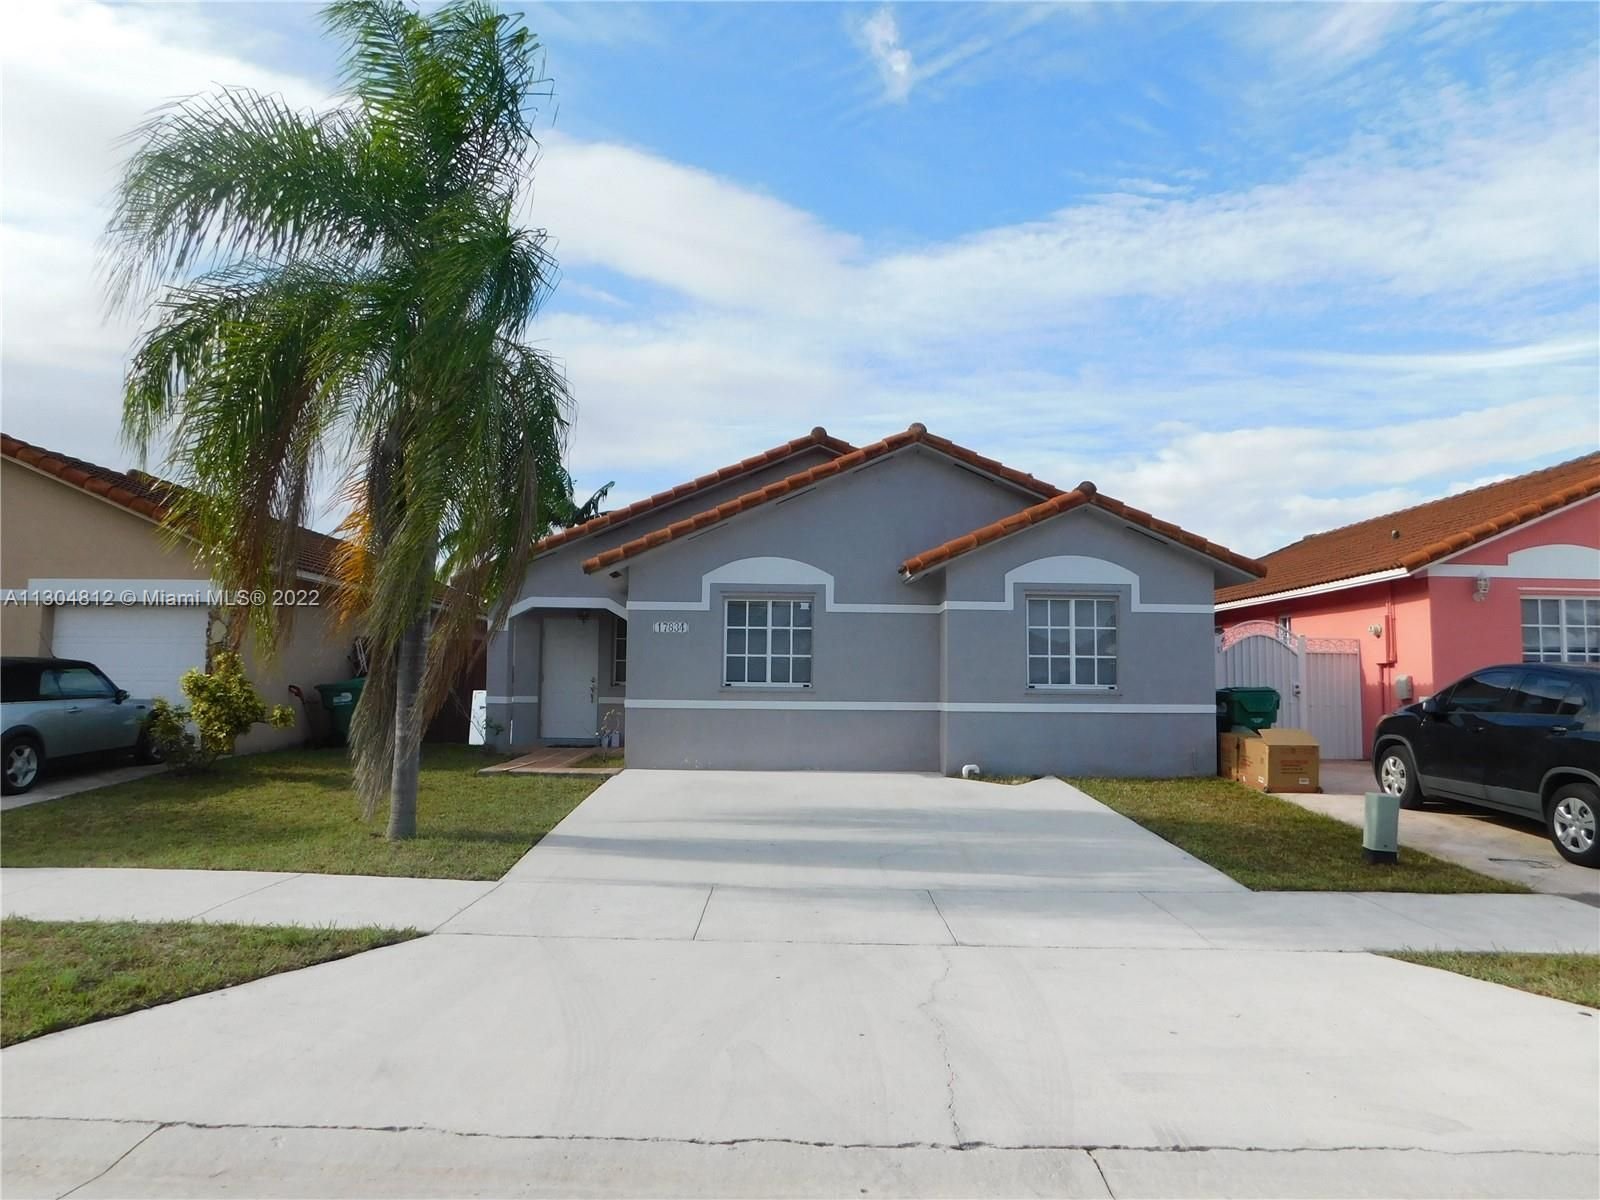 Real estate property located at 17834 144th Ct, Miami-Dade County, Miami, FL